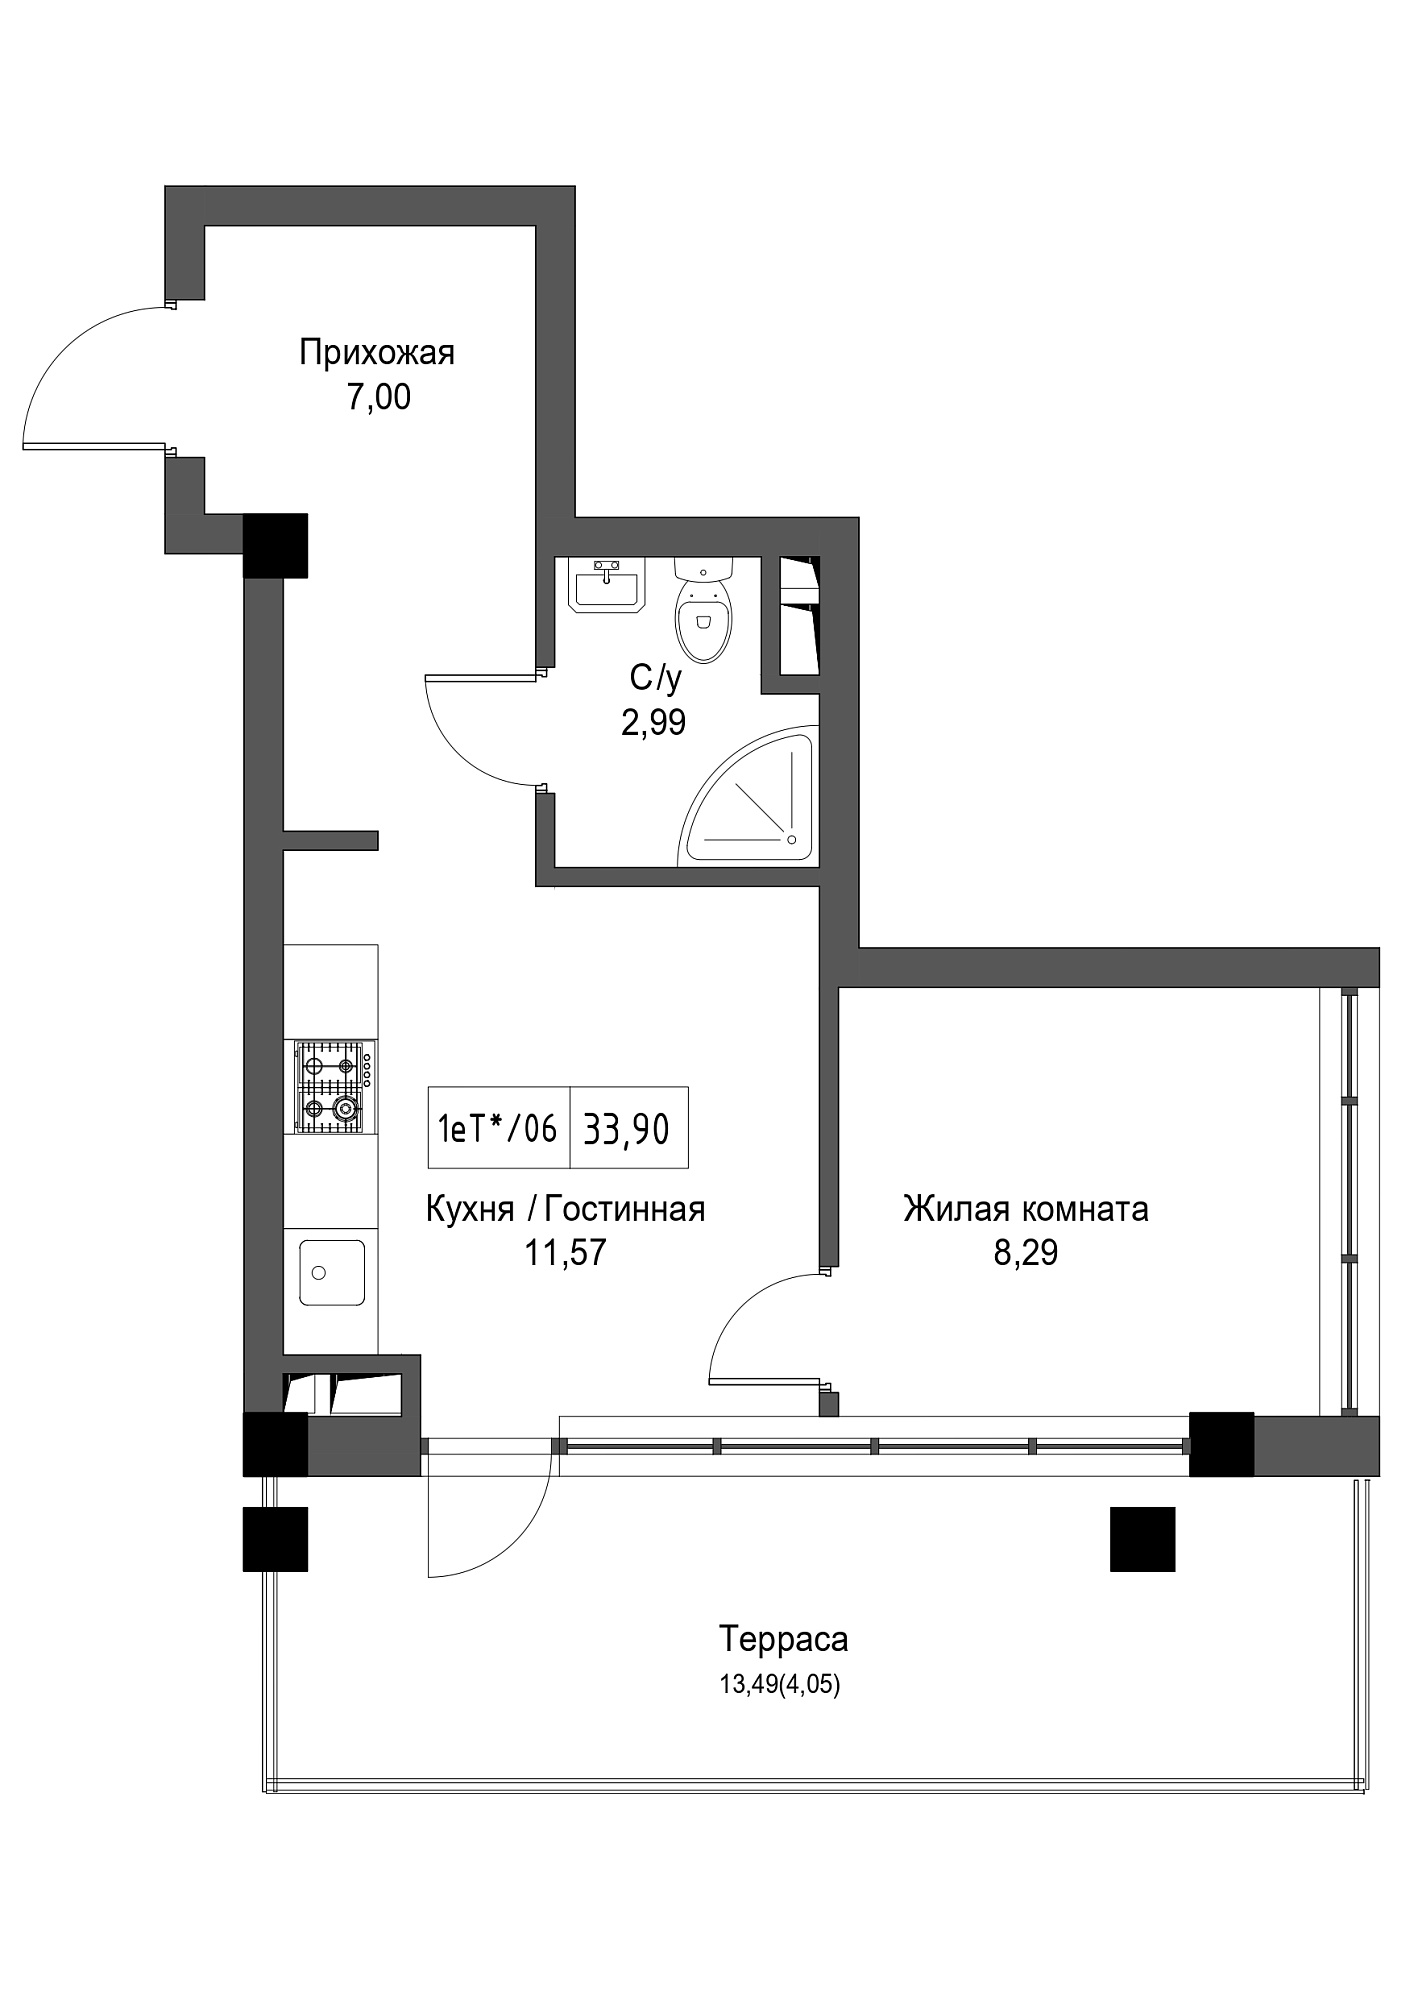 Planning 1-rm flats area 33.9m2, UM-002-02/0093.